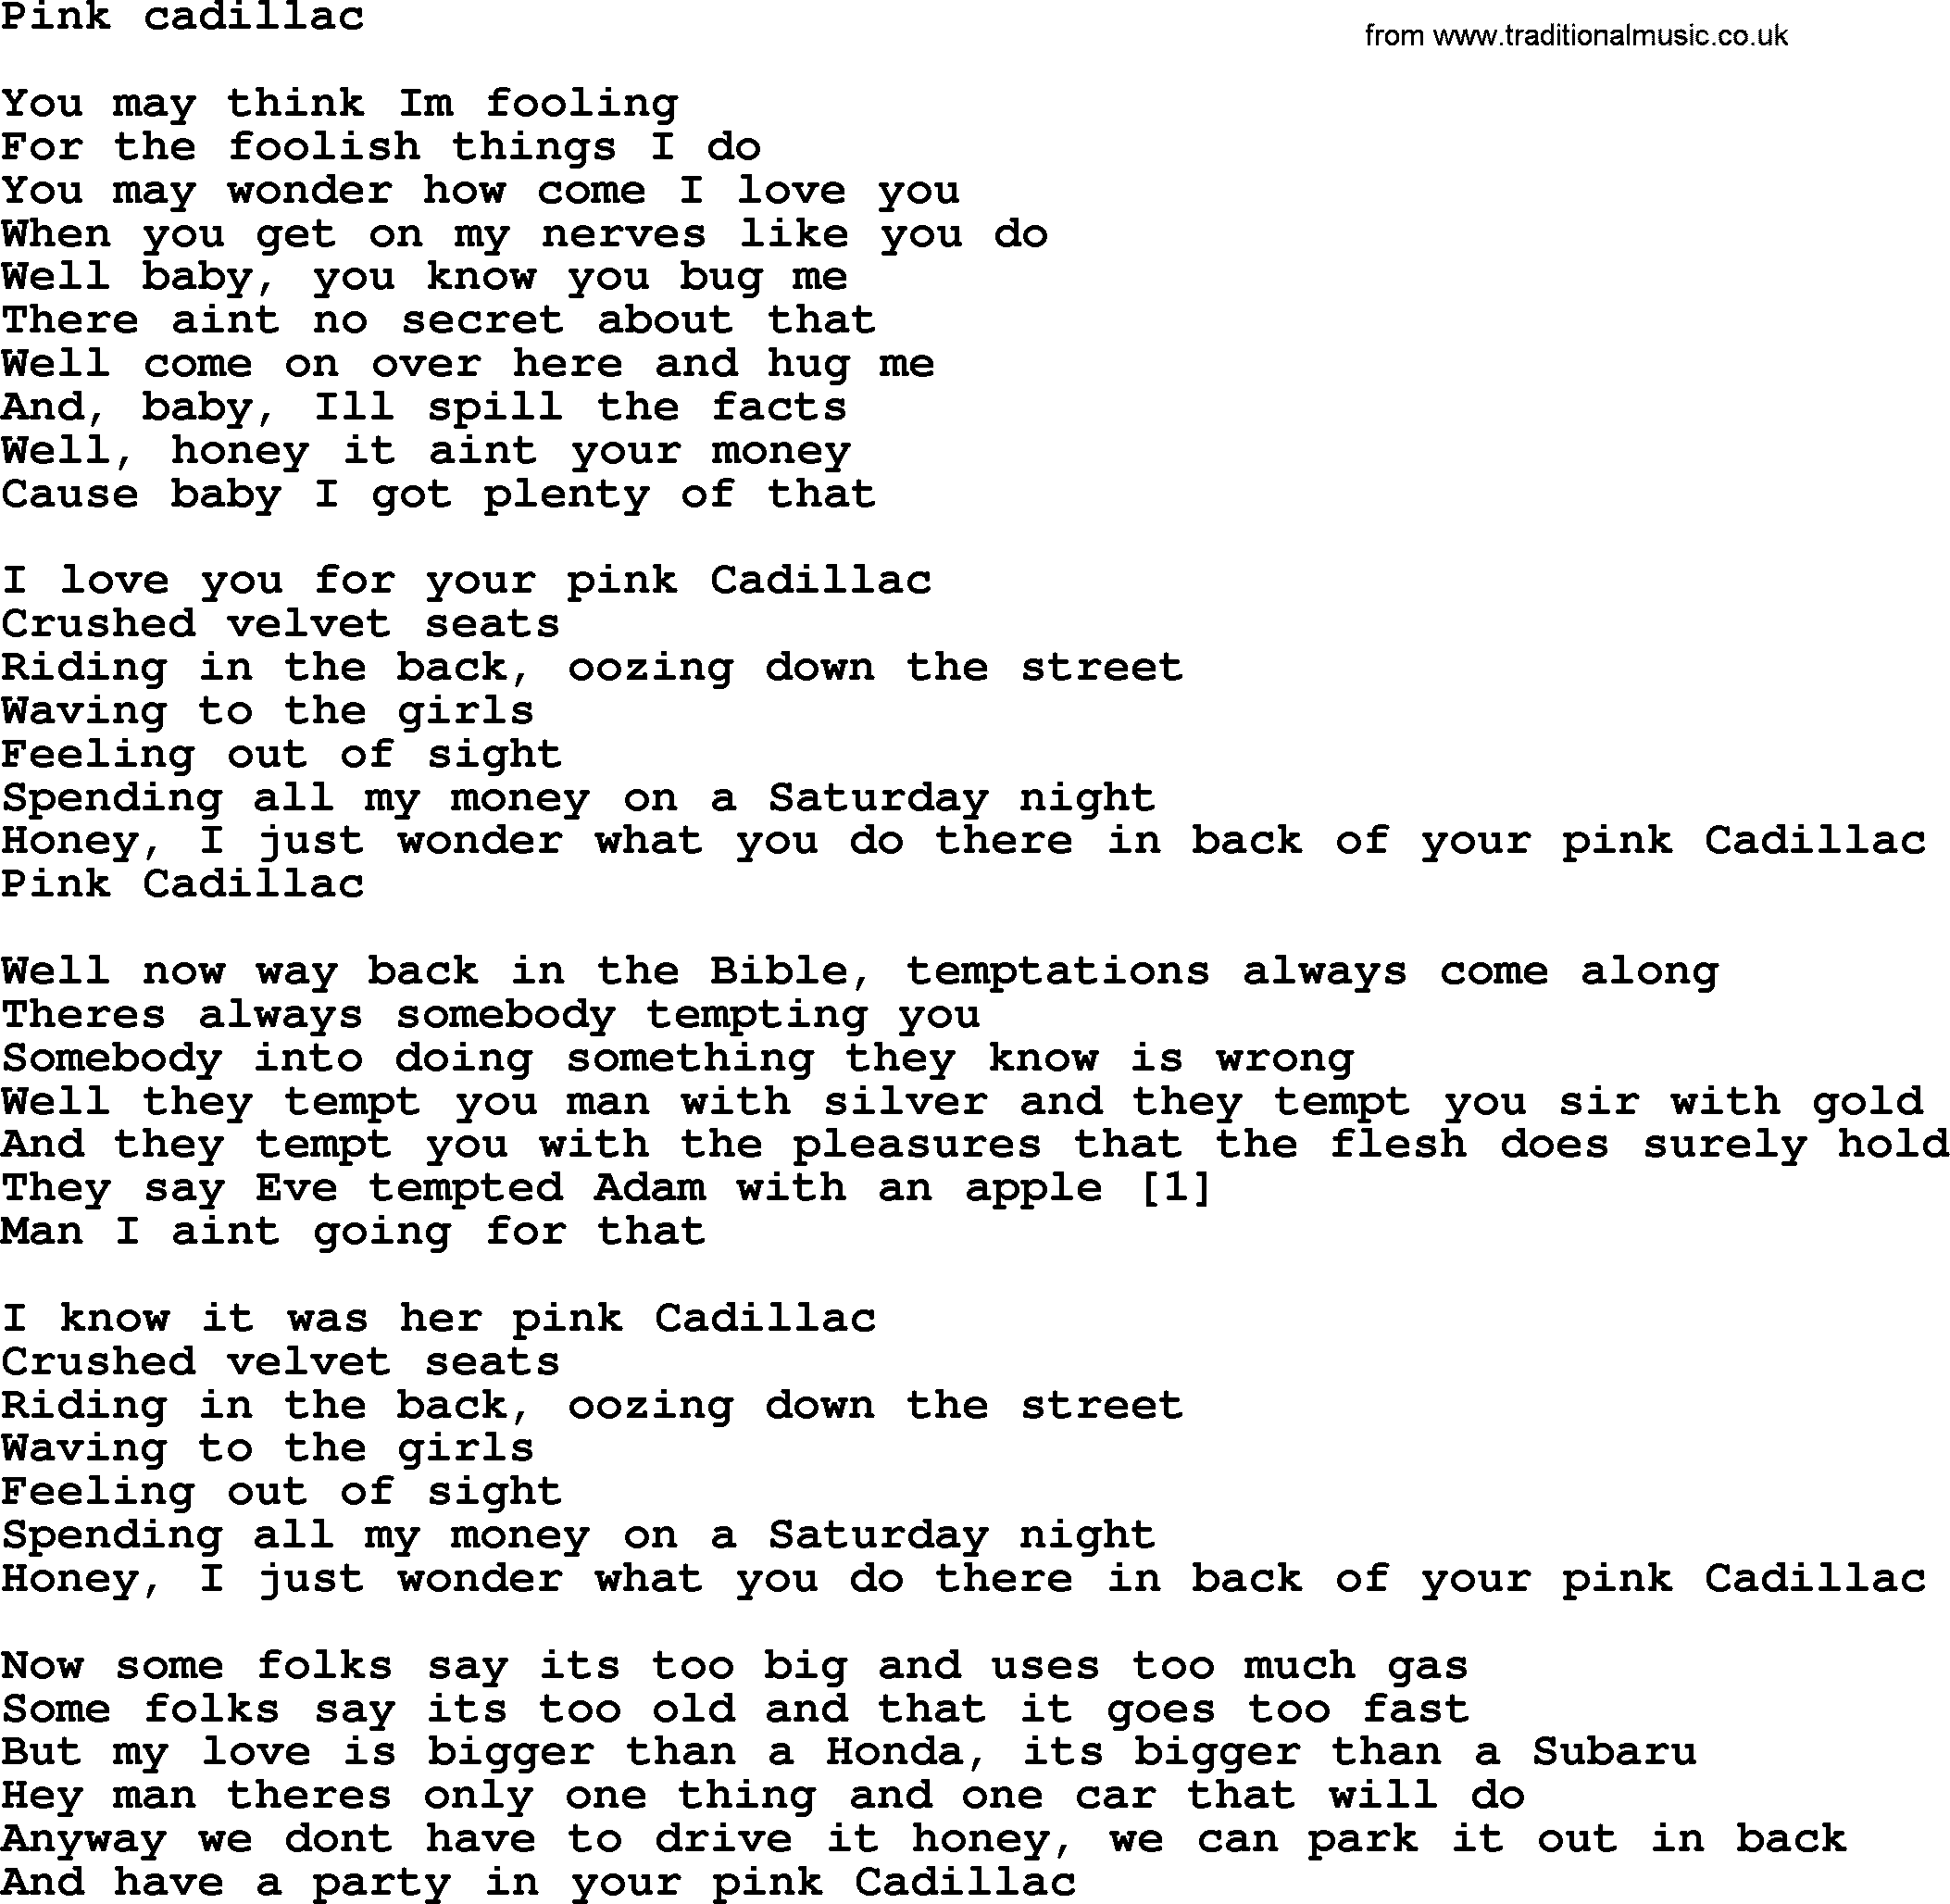 Bruce Springsteen song: Pink Cadillac lyrics